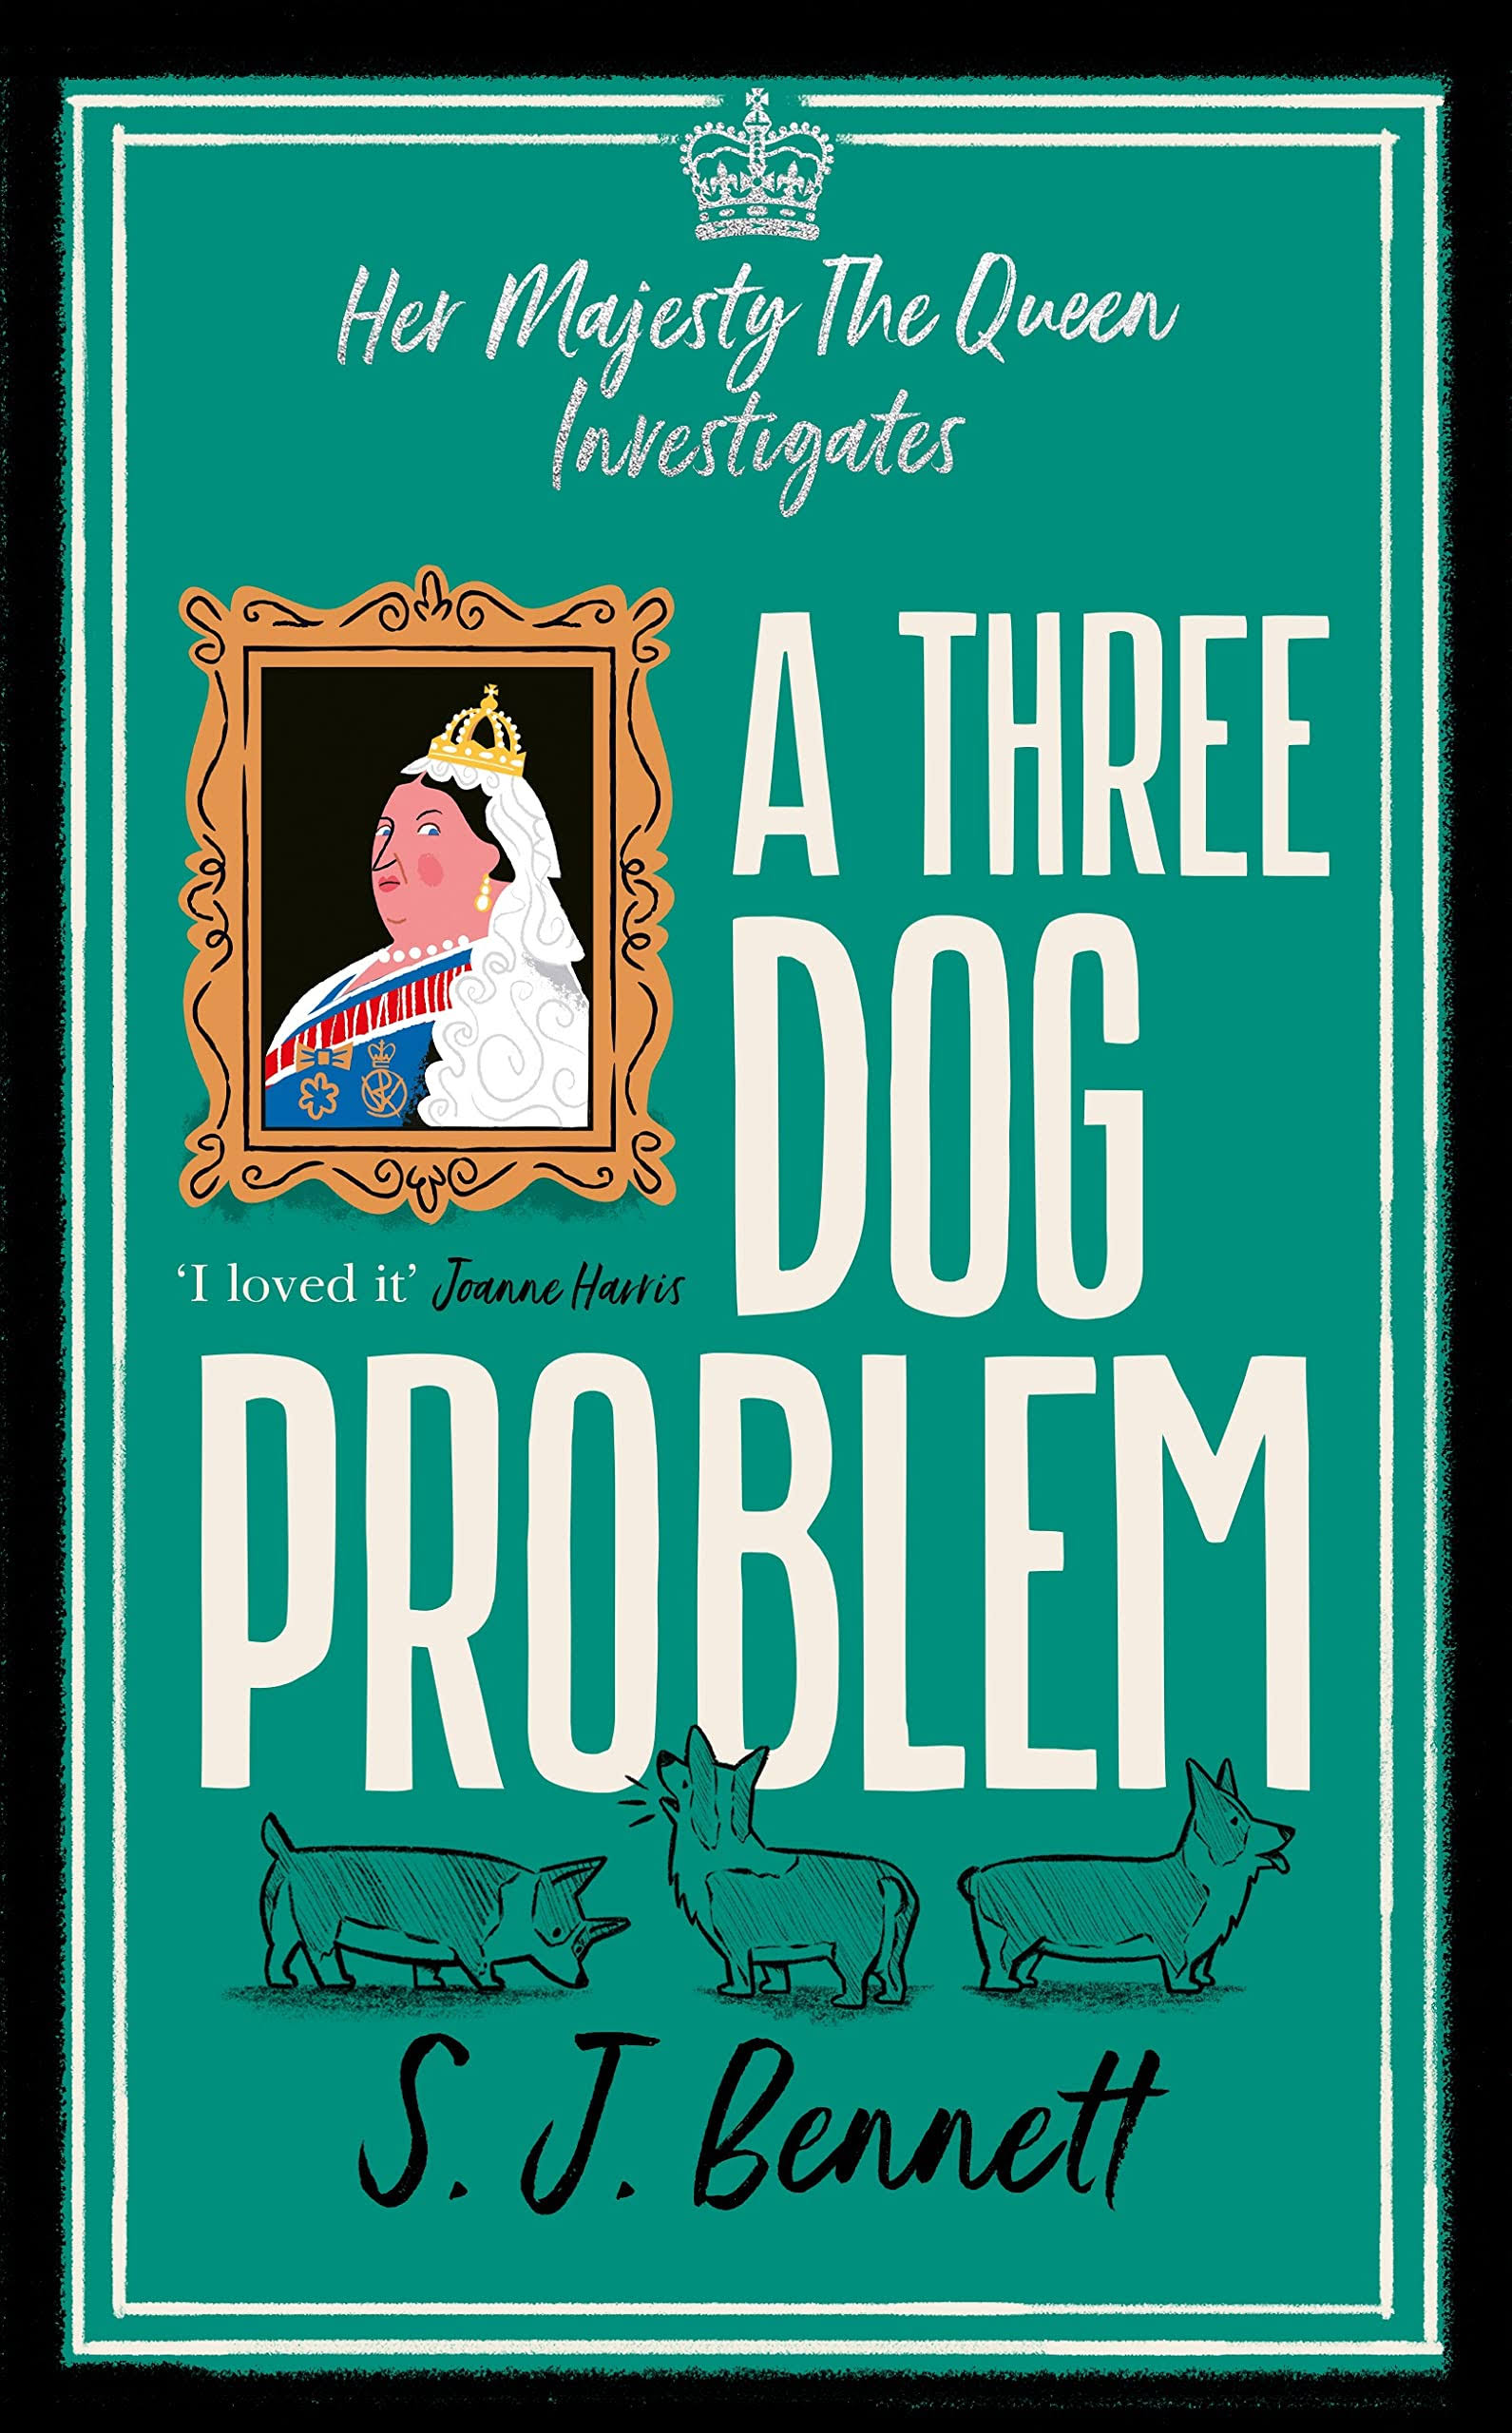 THREE DOG PROBLEM [Book]